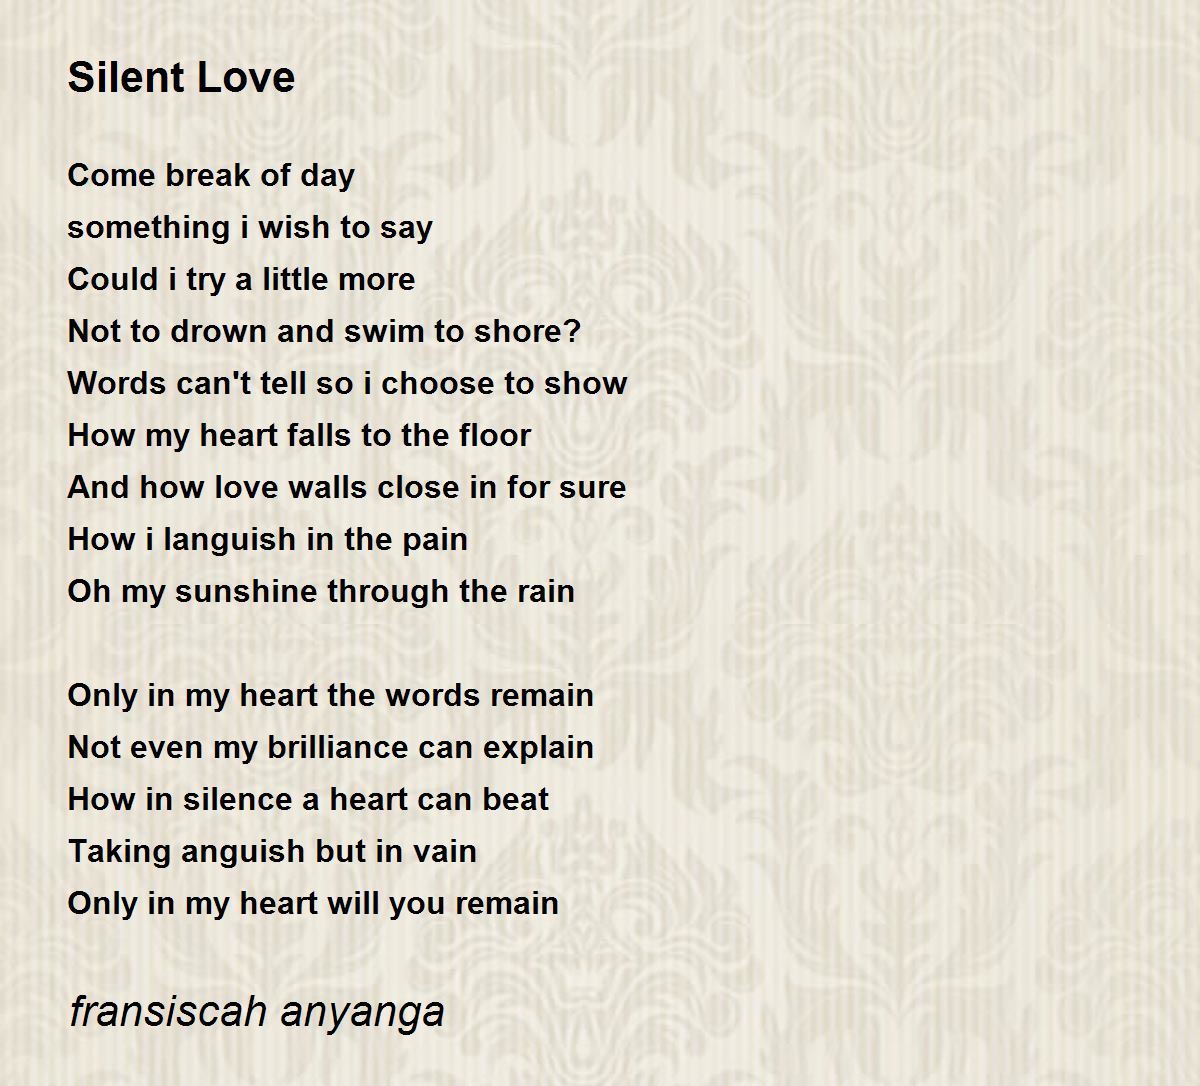 Silent Love - Silent Love Poem by fransiscah anyanga